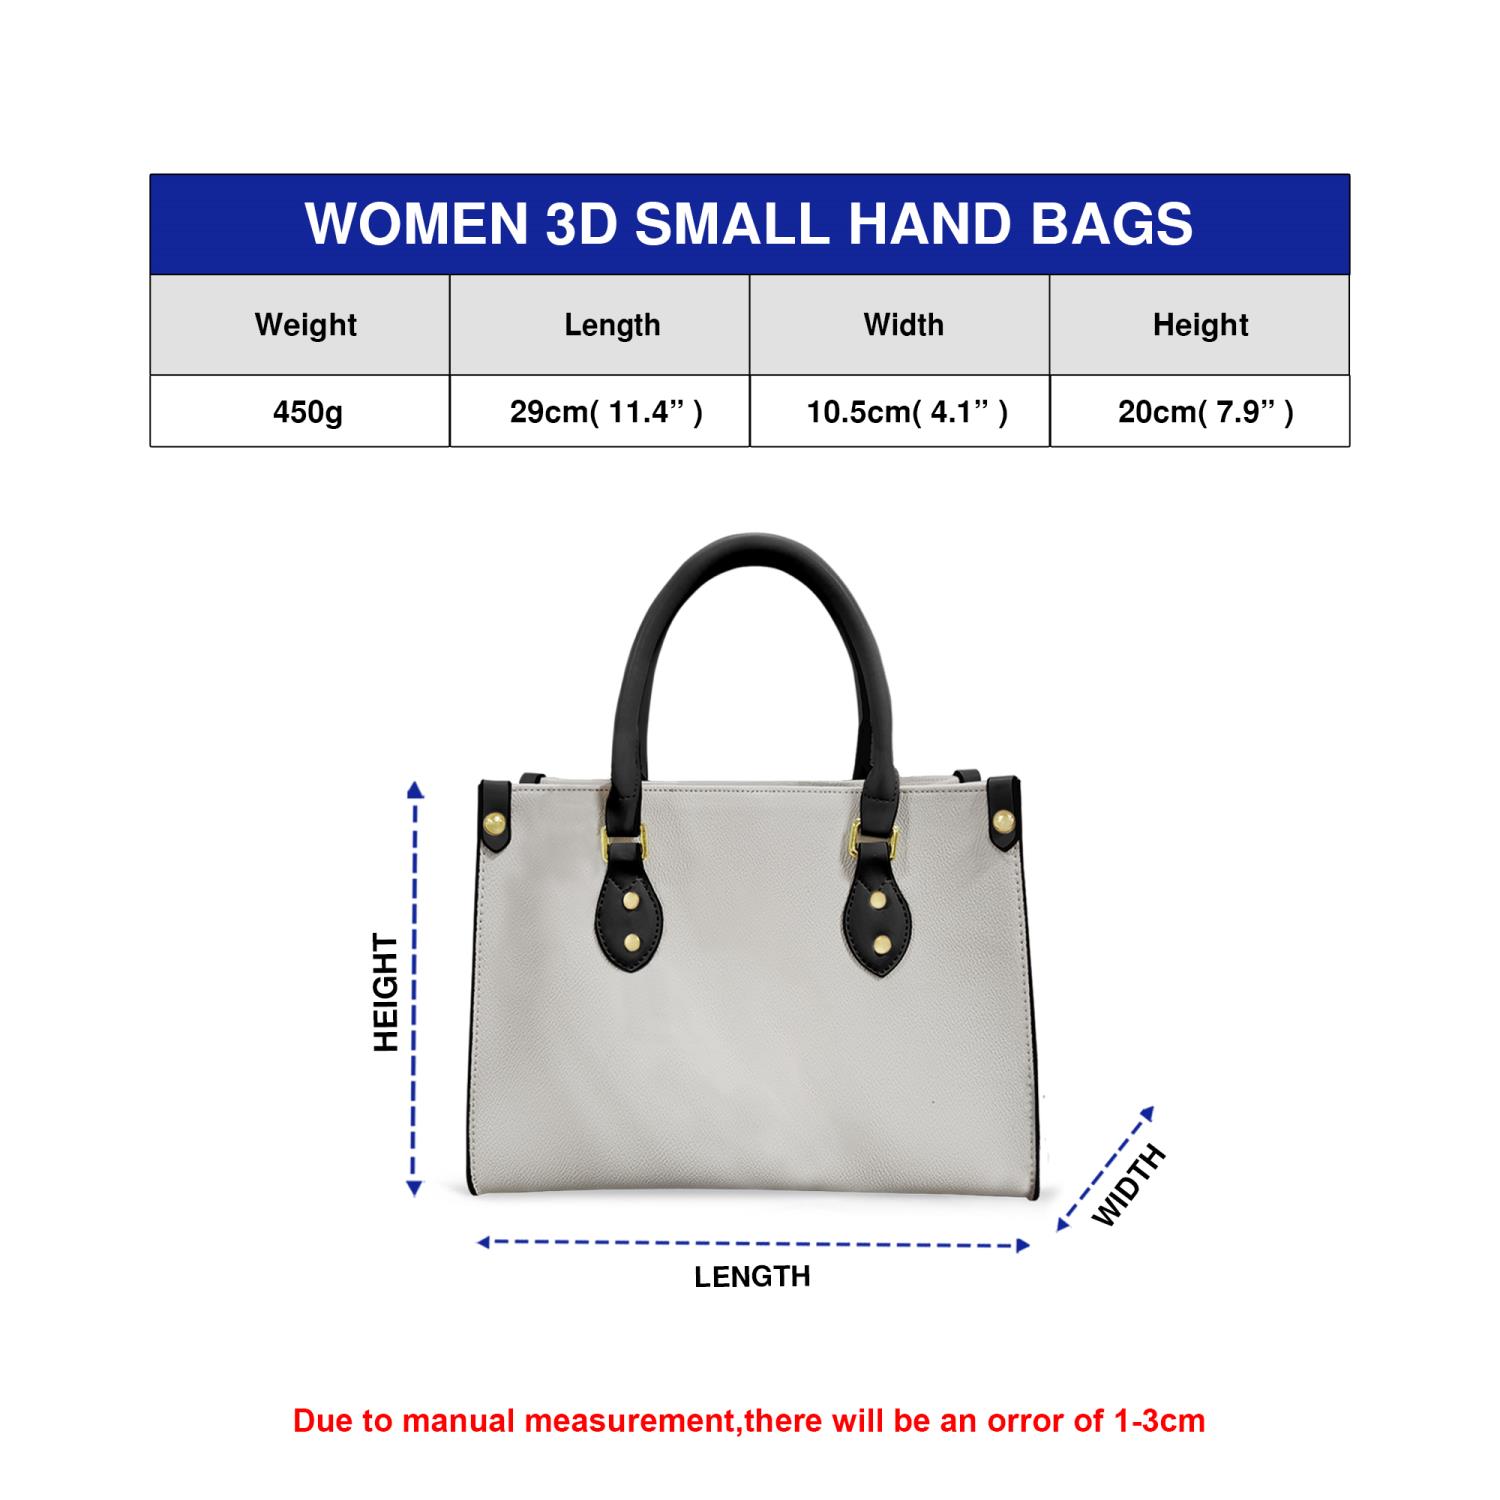 Women 3D Small Handbags